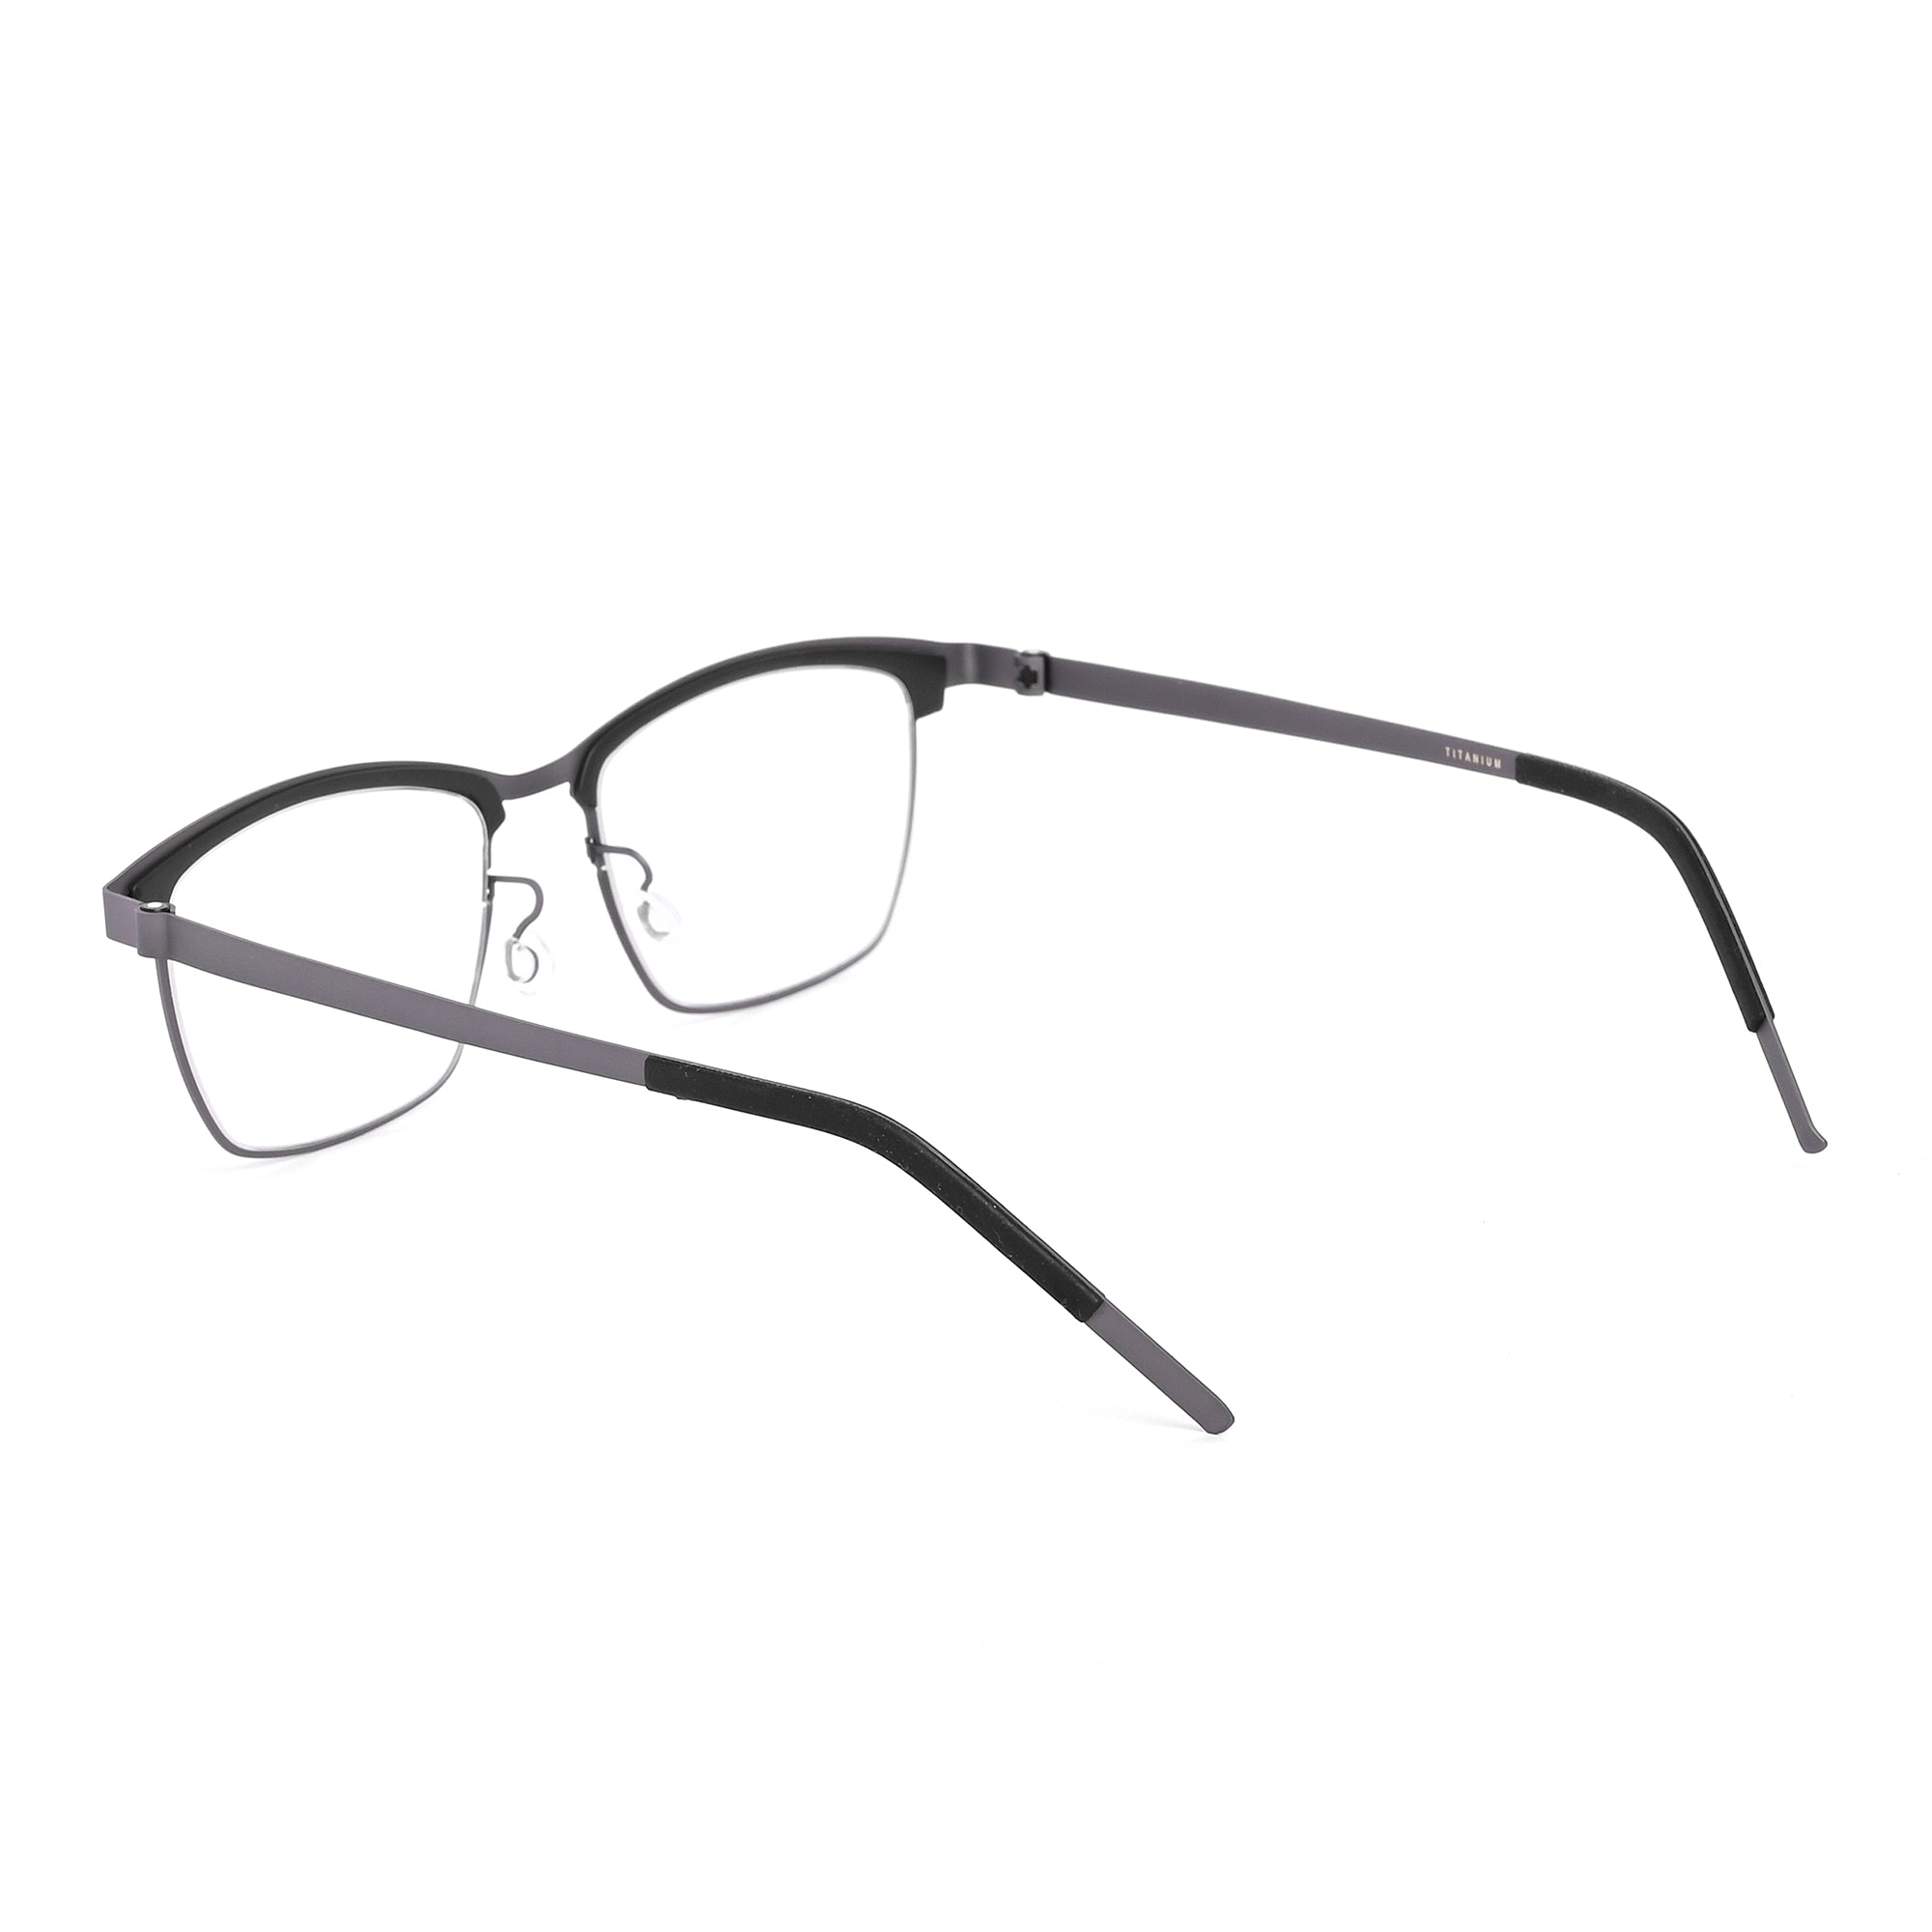 Black & Grey Square Keymount Eyeglasses - LG-007 BLKGR